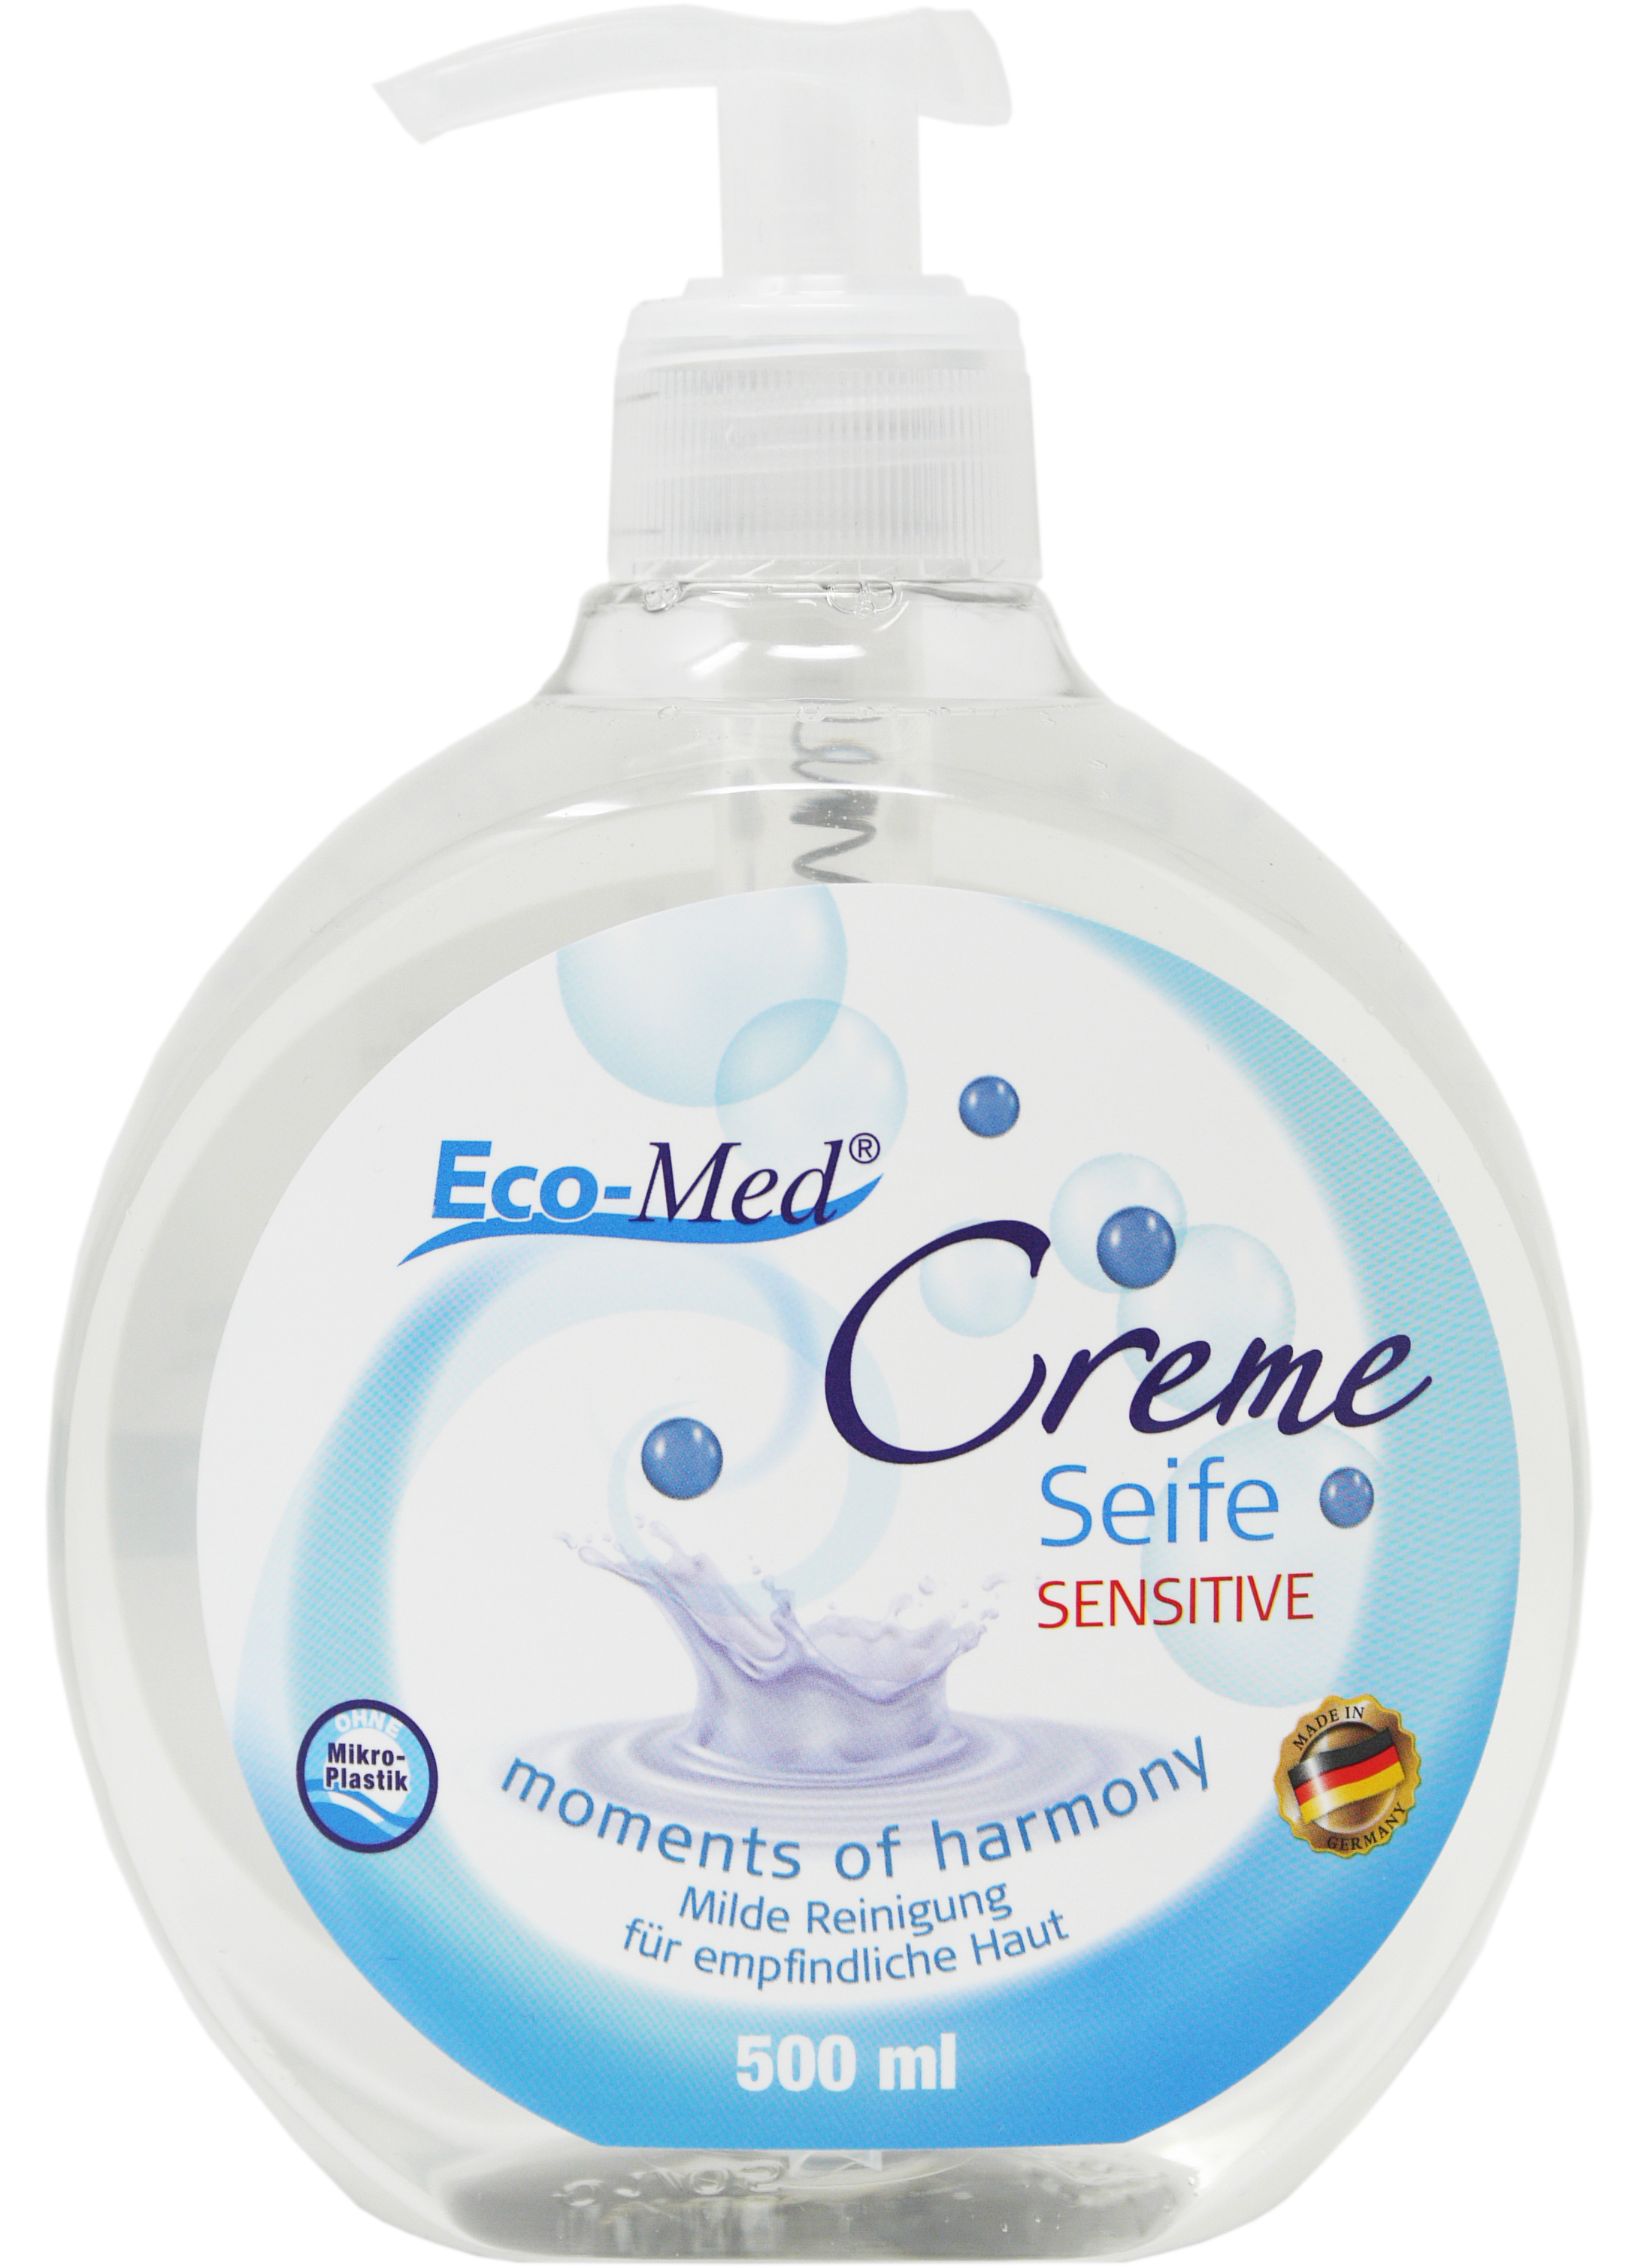 01620 - Eco-Med Cremeseife 500 ml - moments of harmony - sensitive